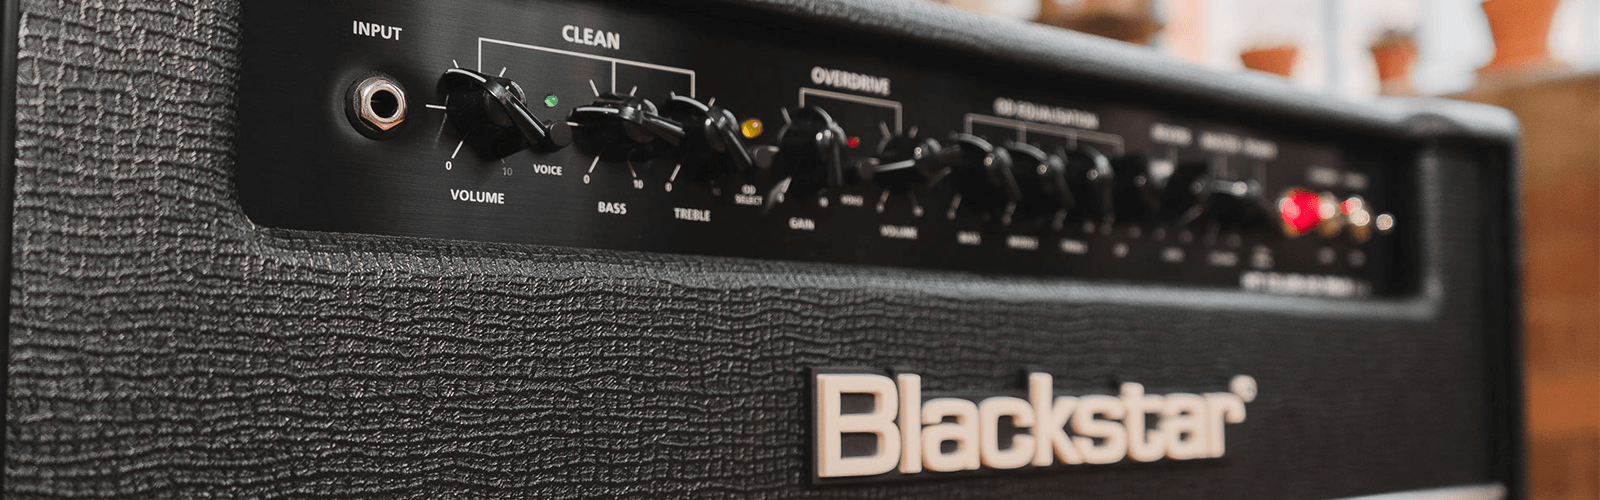 leaned closeup view of a Blackstar guitar amp